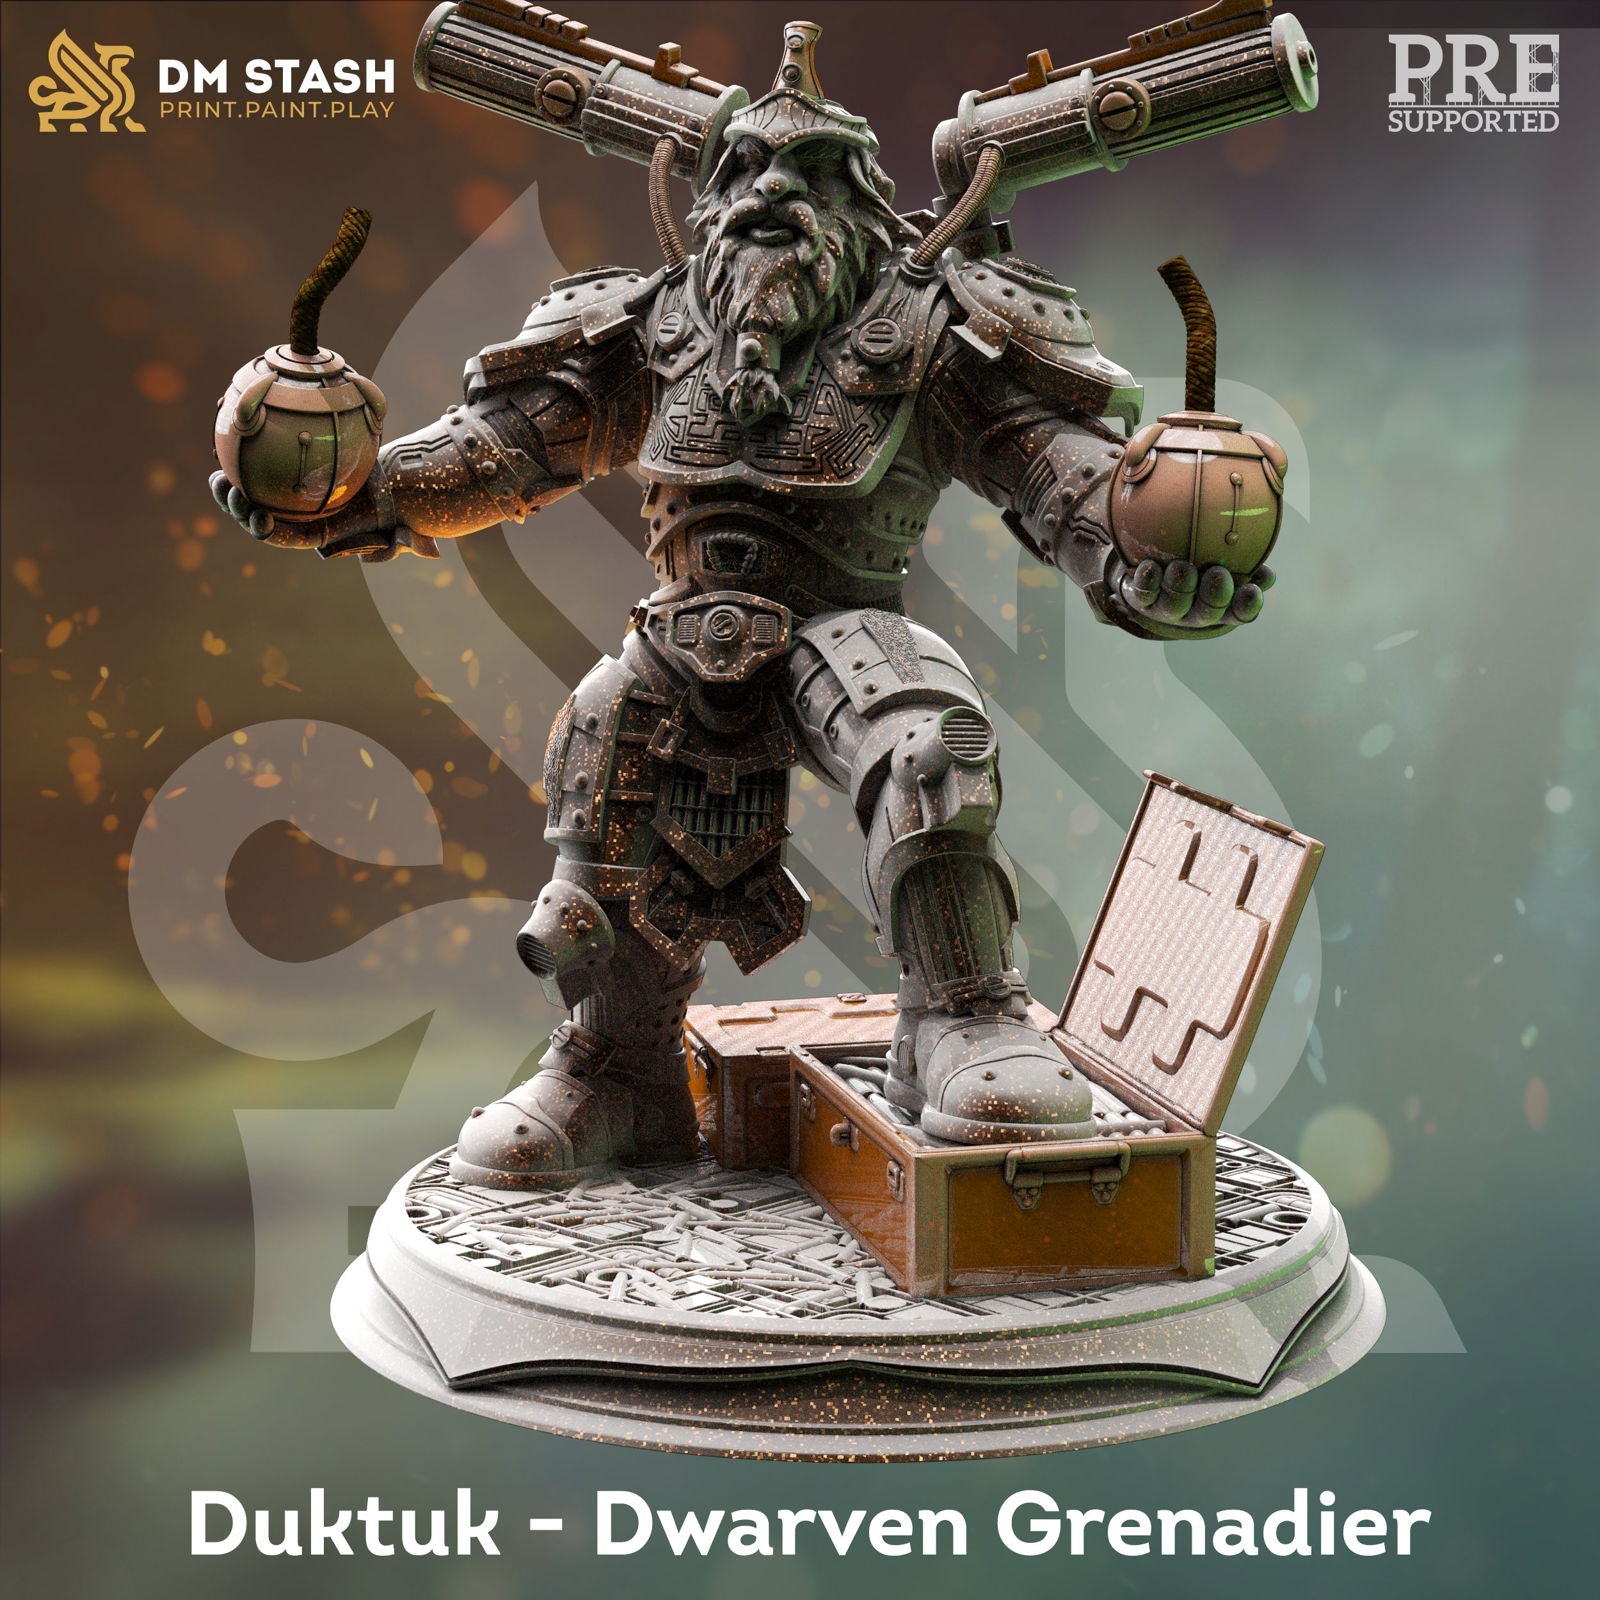 Duktuk Dwarven Grenadier - The Printable Dragon